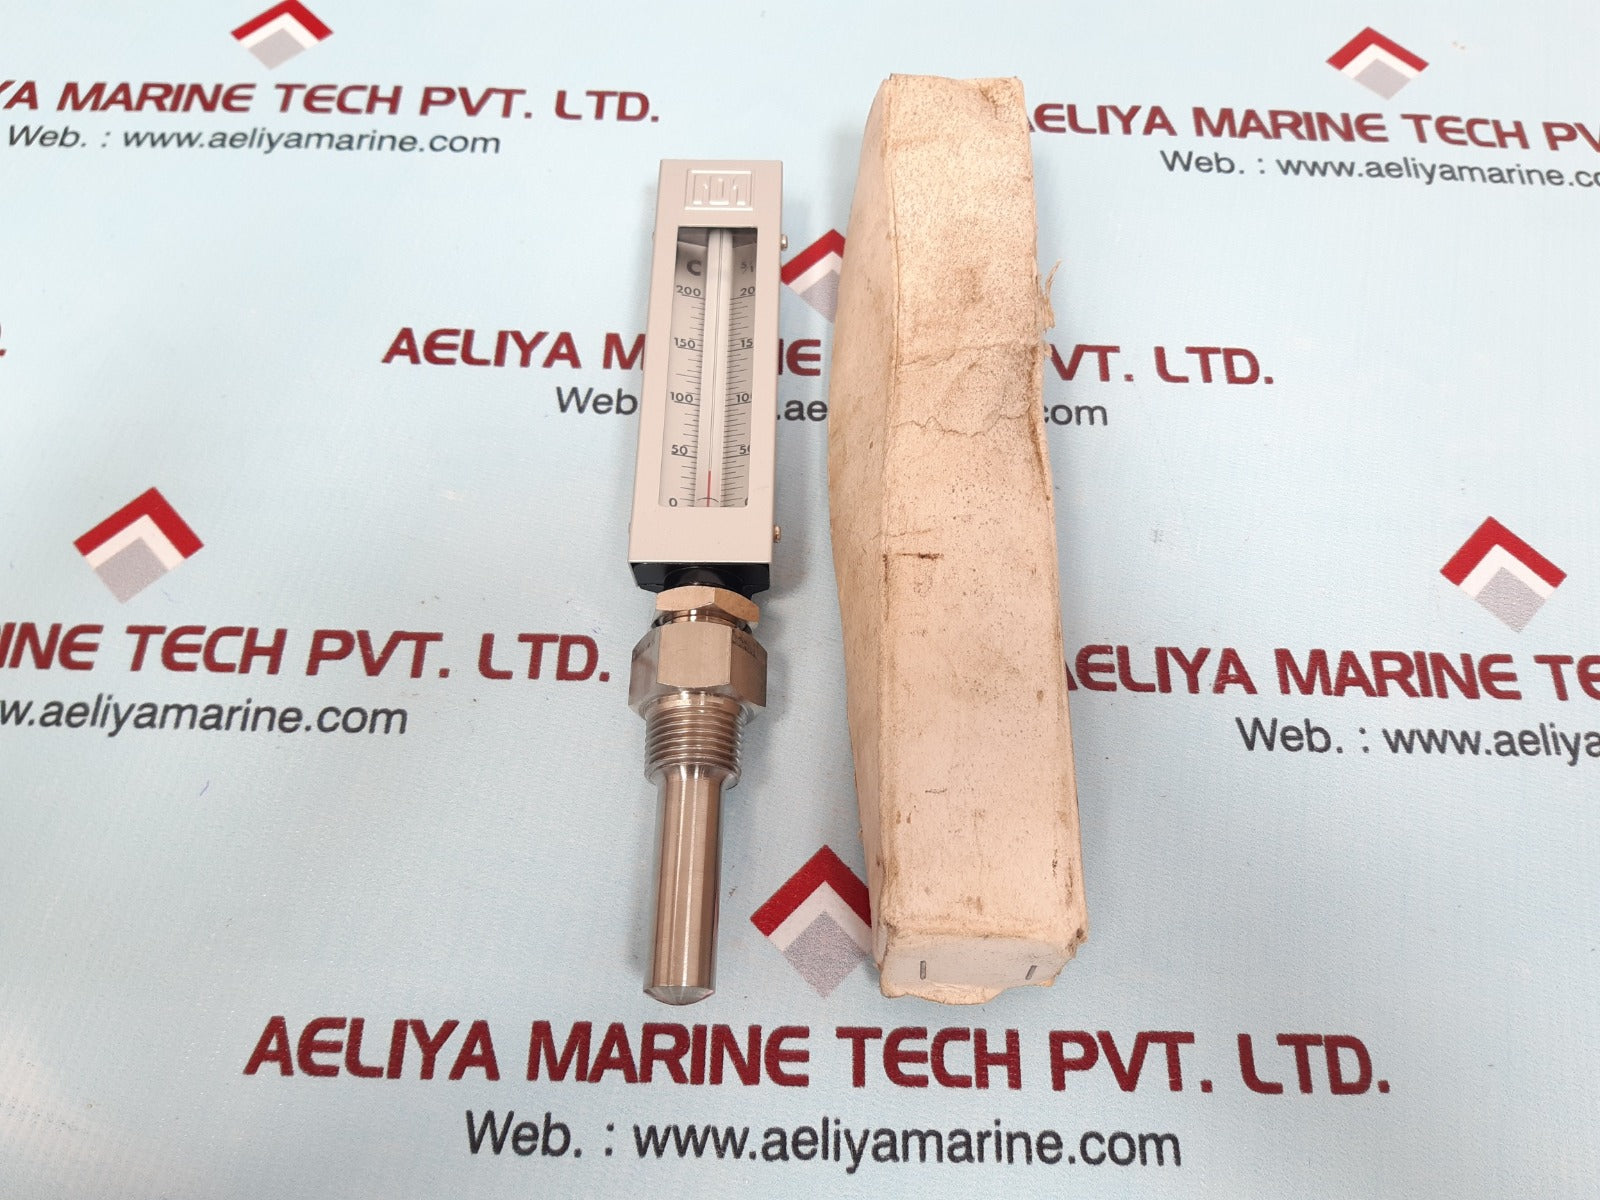 0-200 'c marine engine gauge thermometer